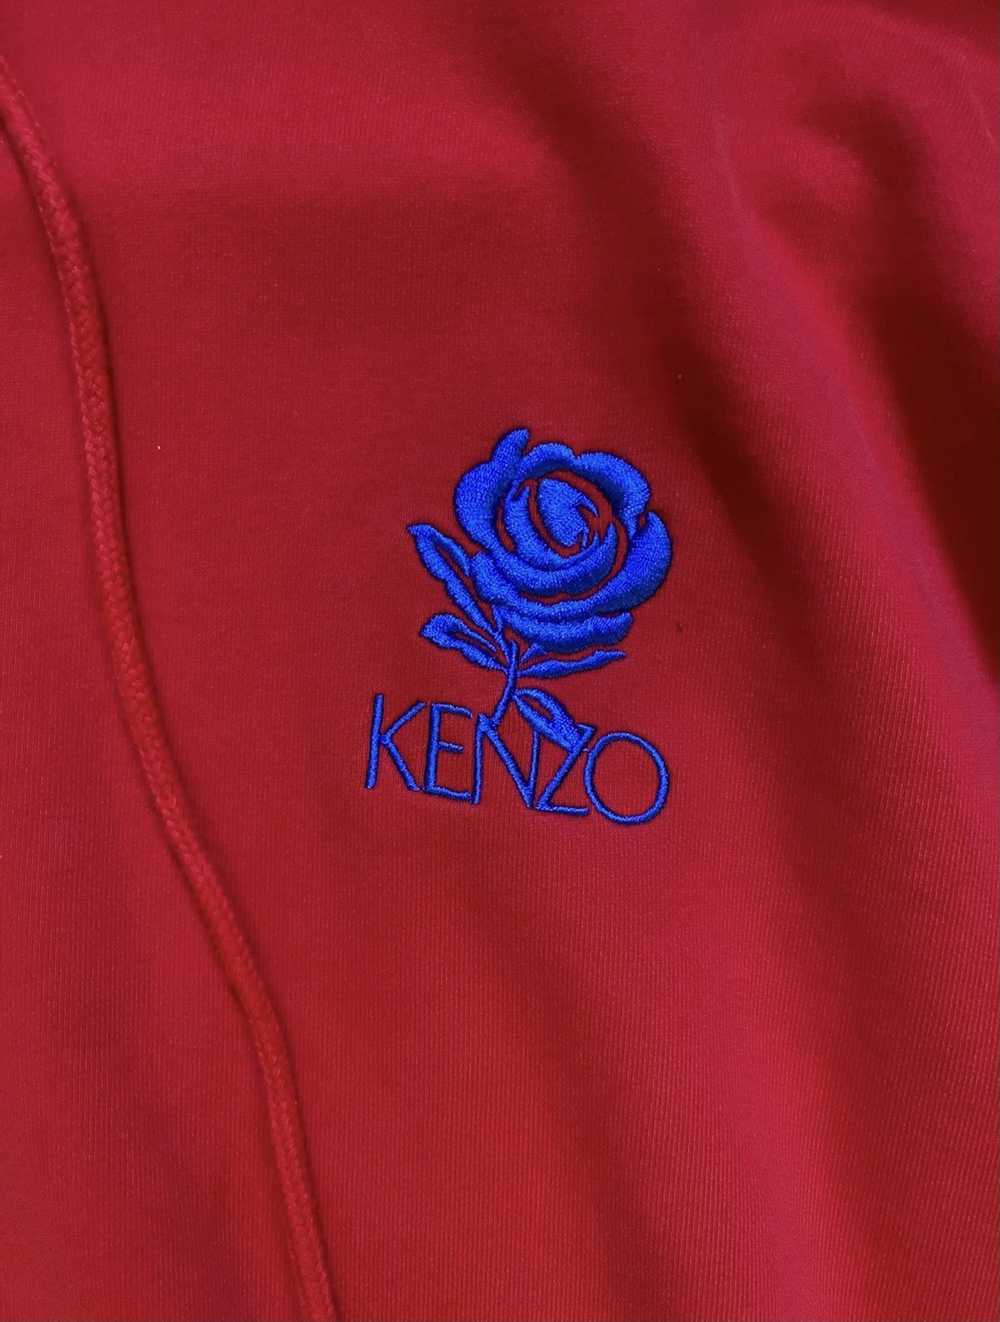 Kenzo Red Rose Kenzo Hoodie/Sweater - image 2